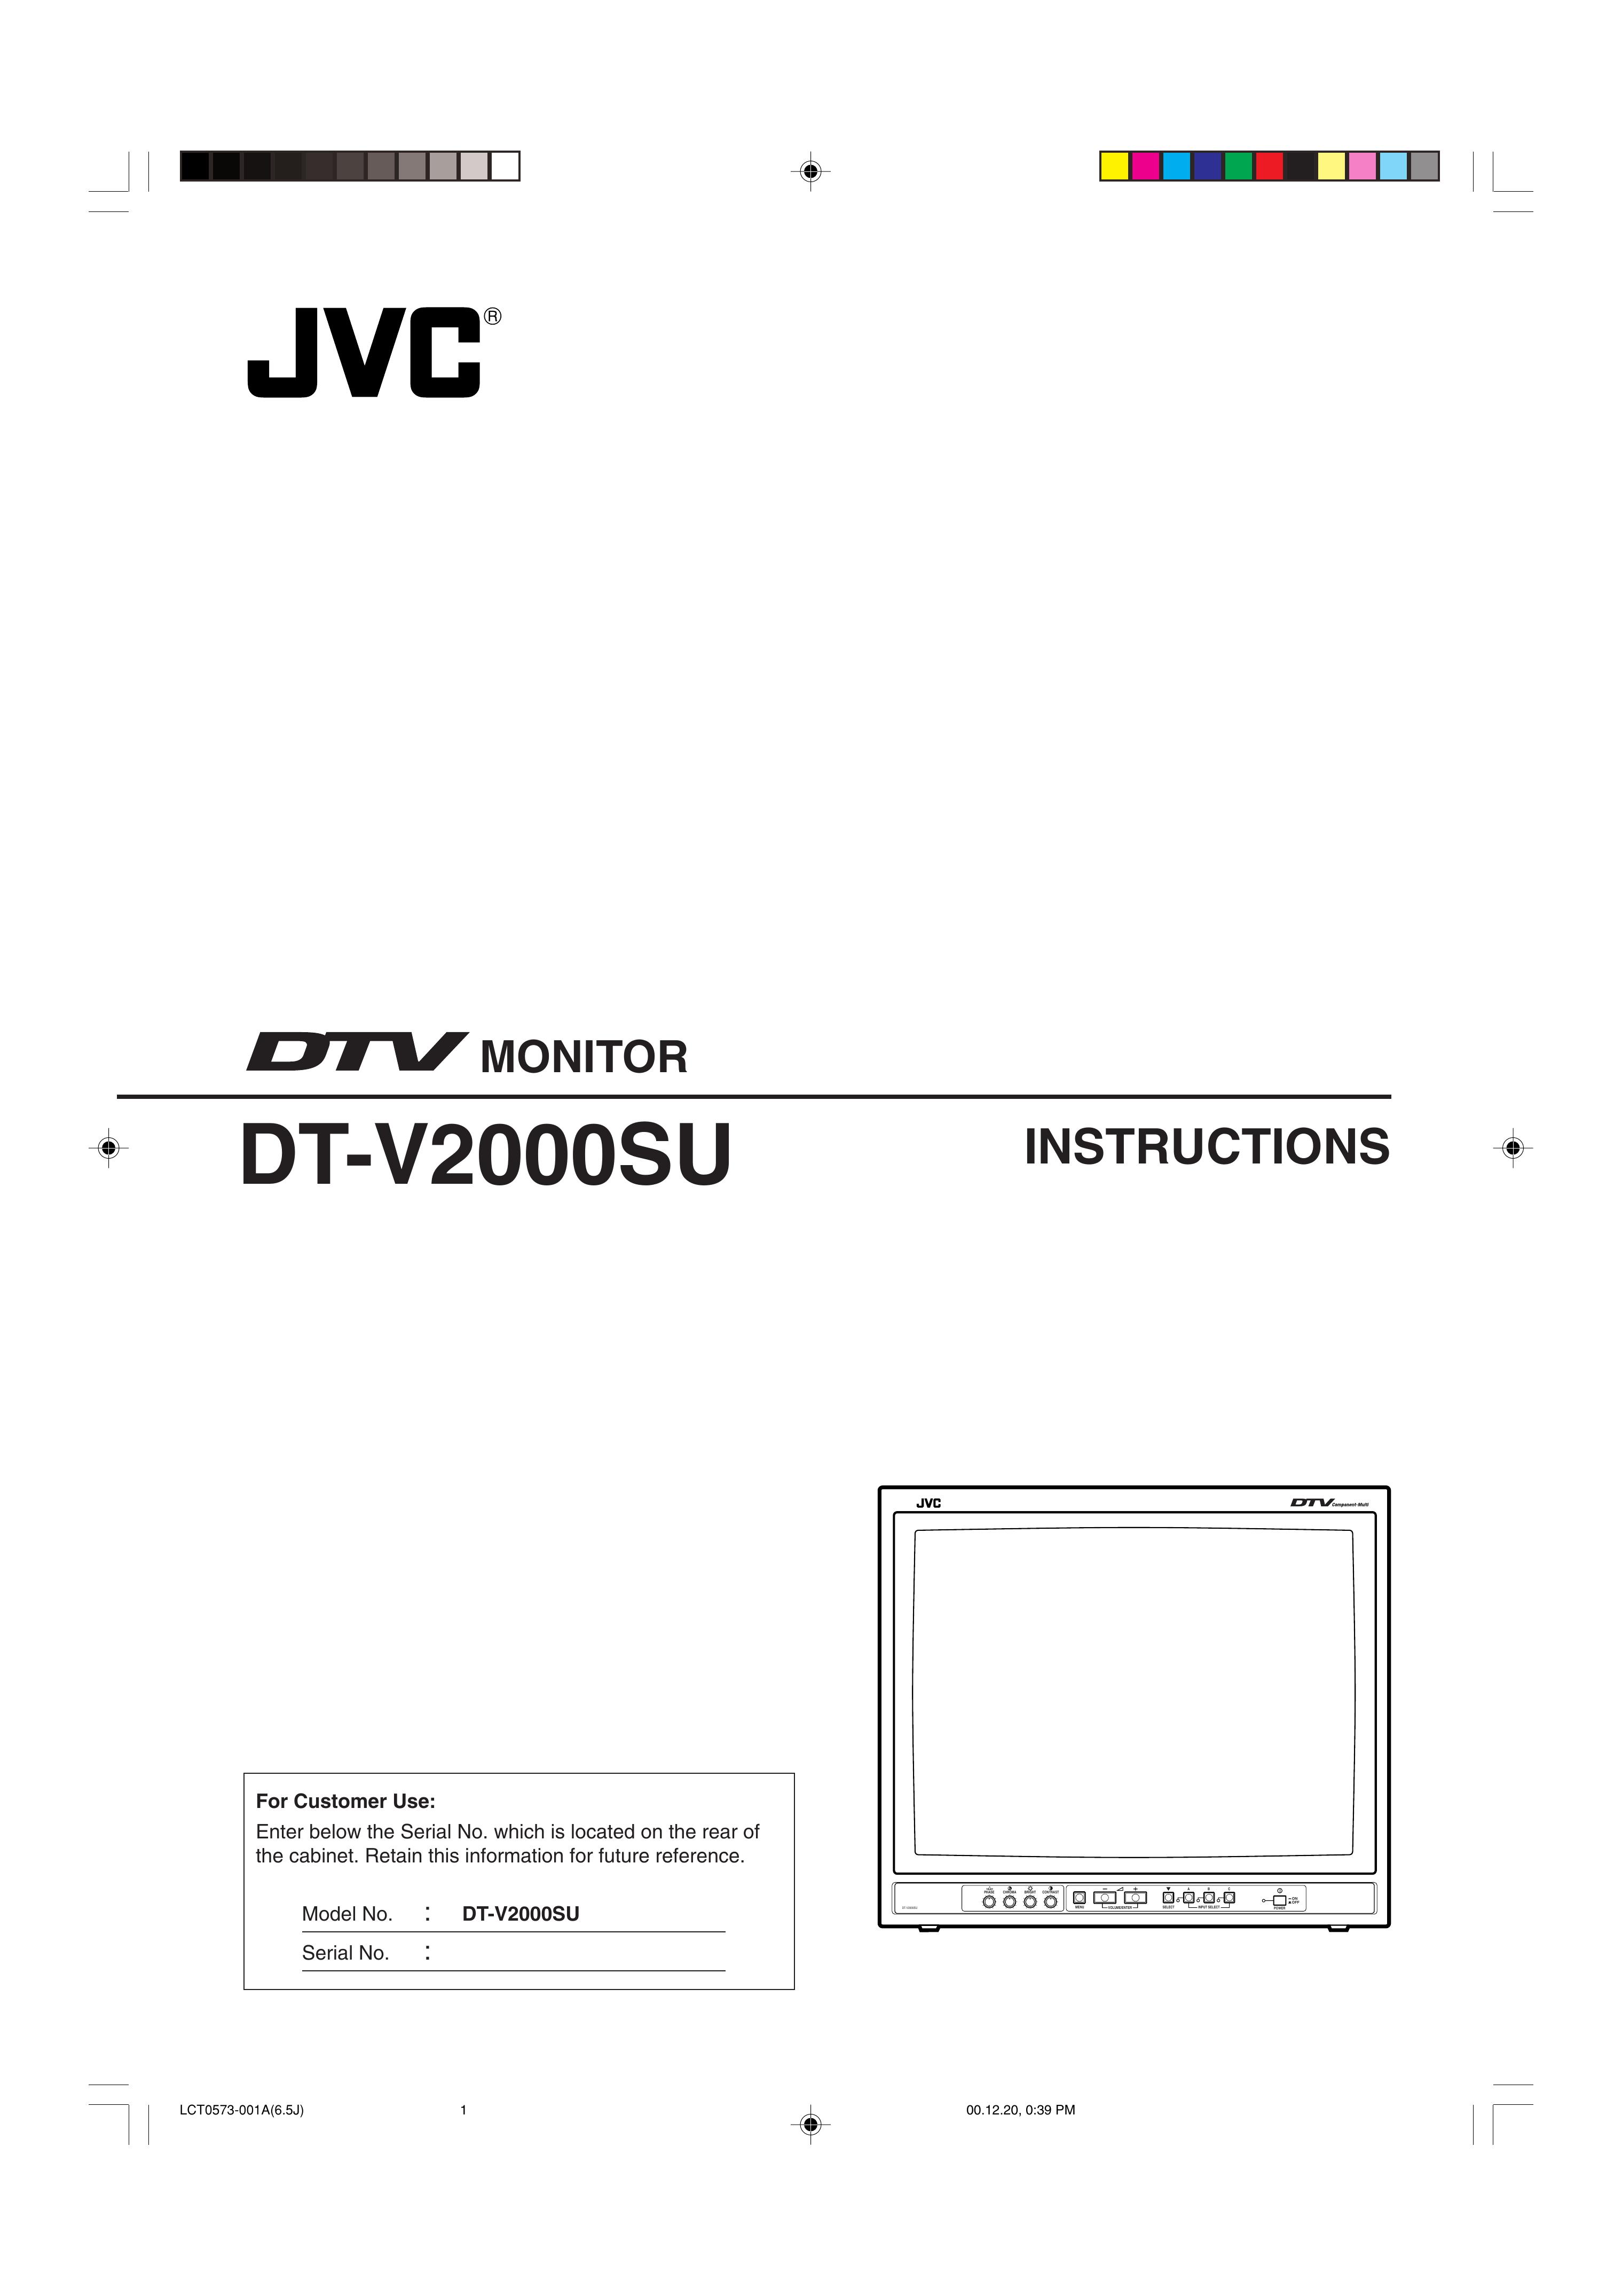 JVC DT-V2000SU Sleep Apnea Machine User Manual